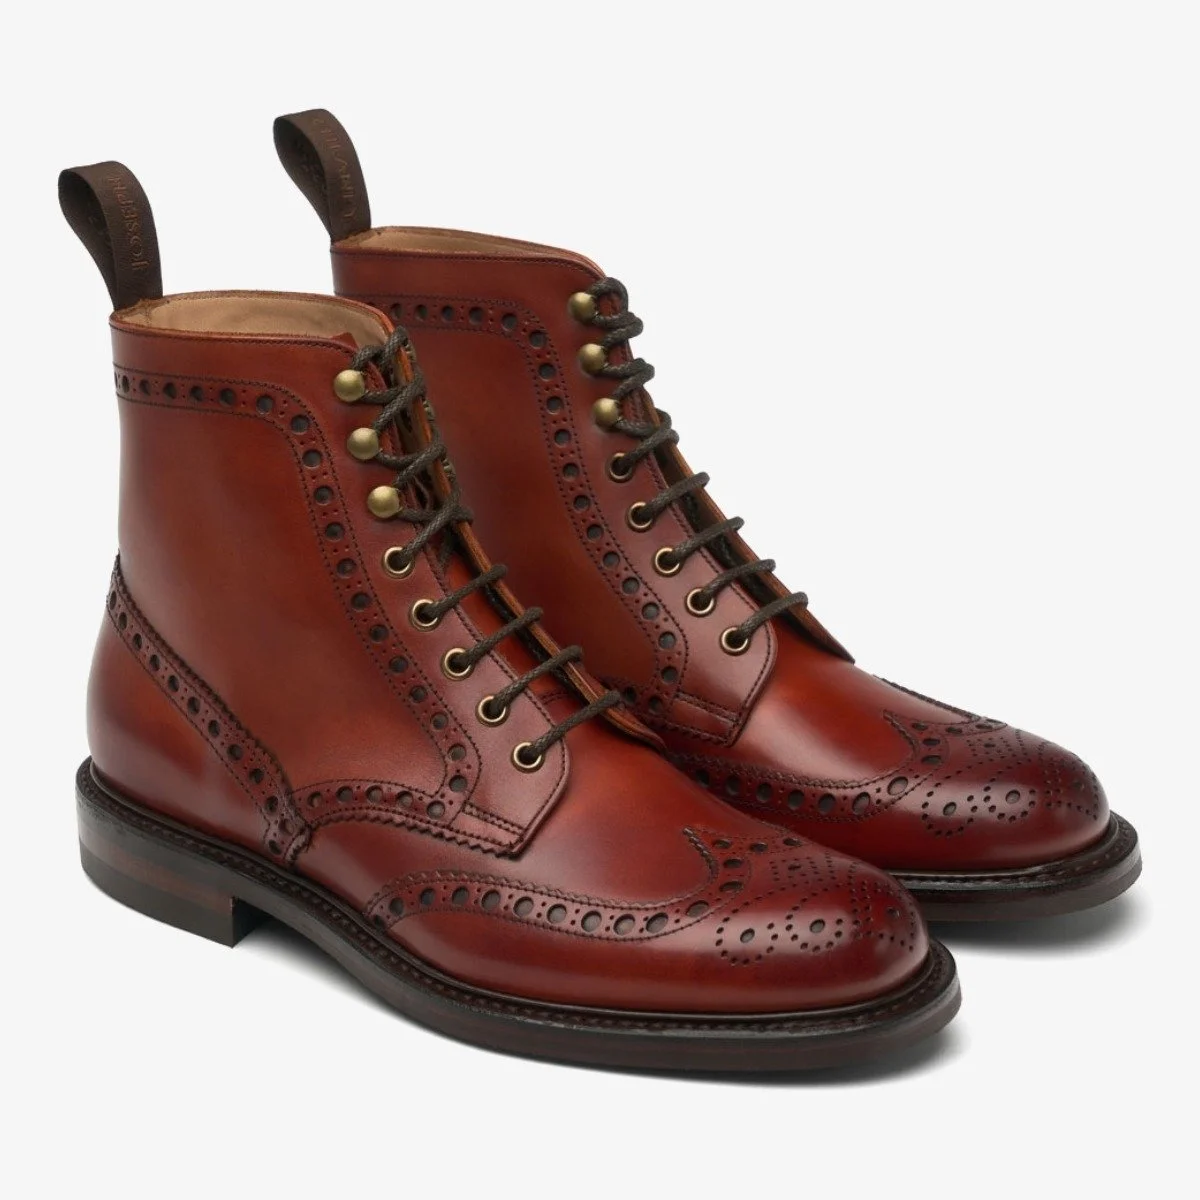 Brogue boots - top 5 men's autumn winter boots